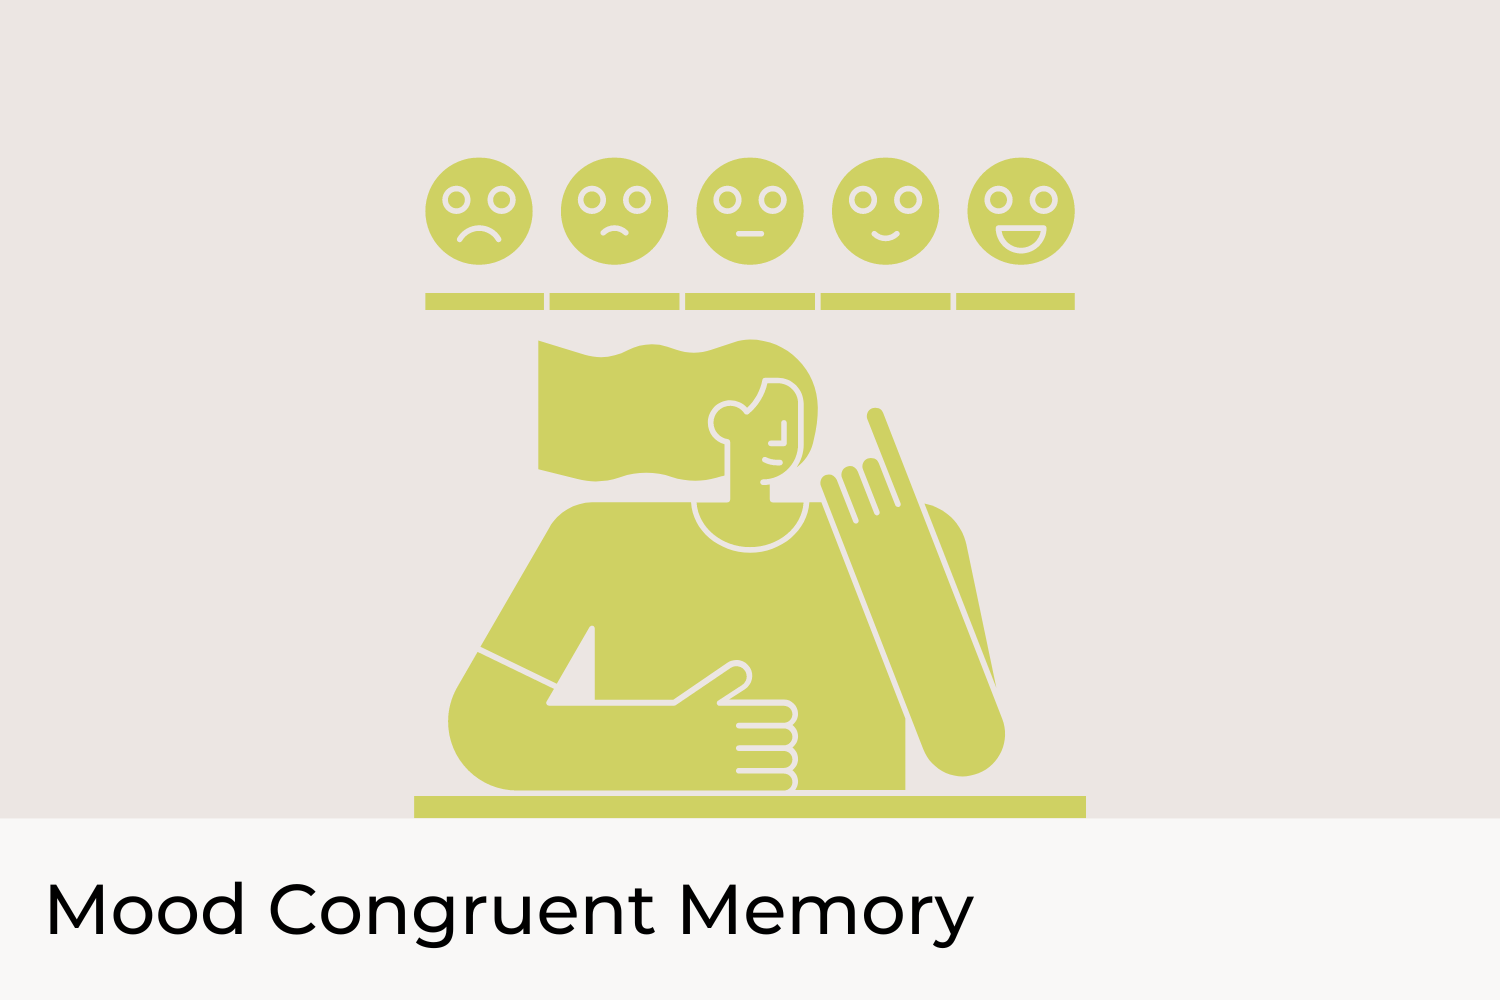 Mood Congruent Memory